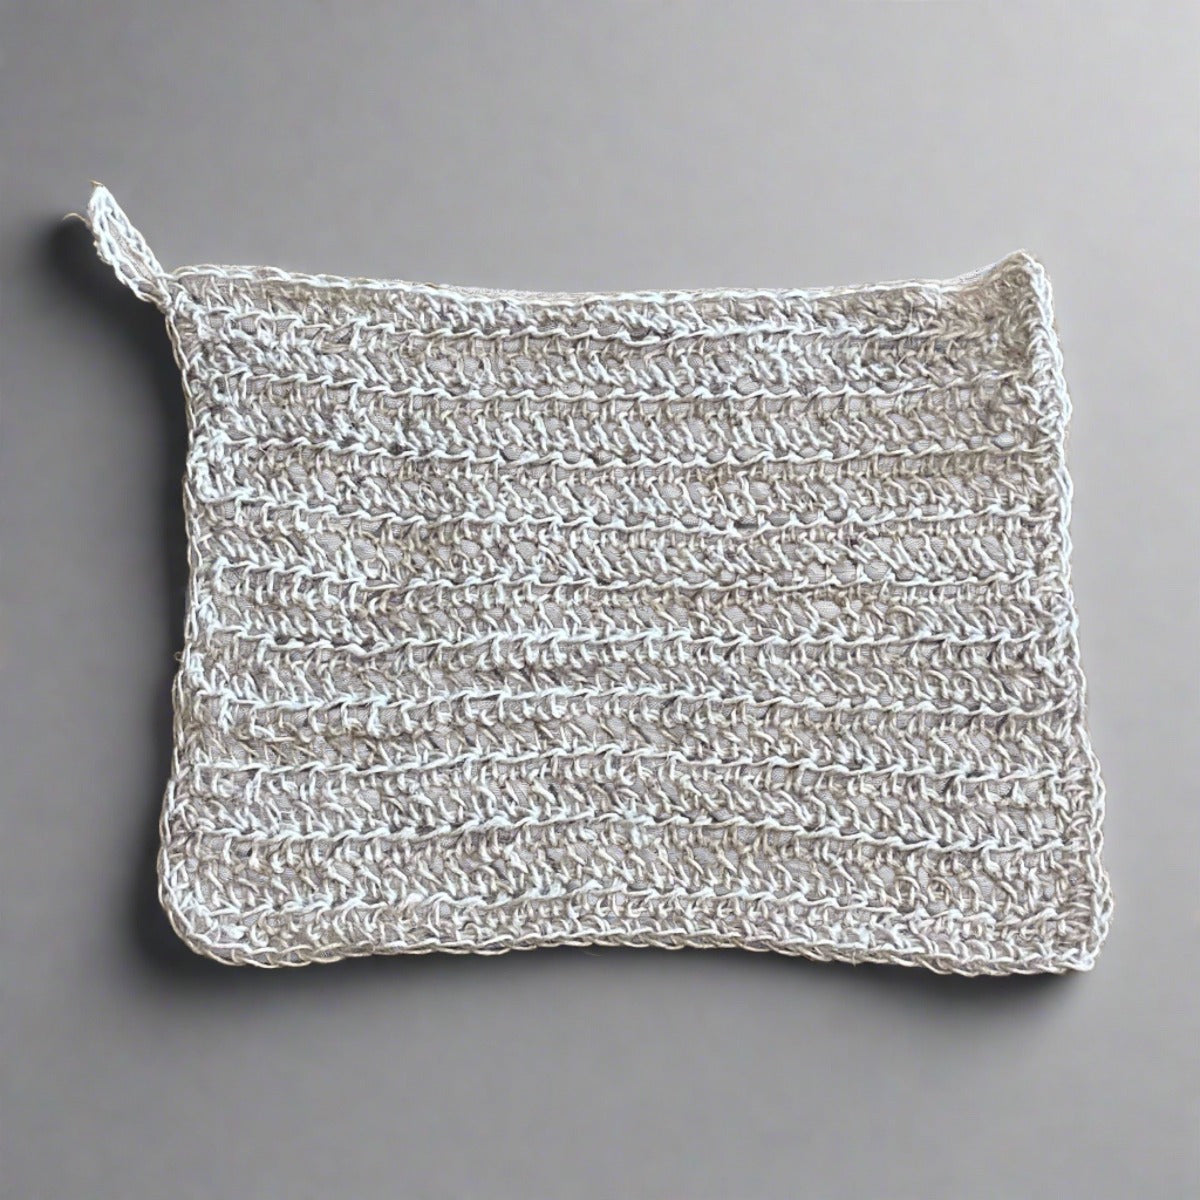 A hemp washcloth, featuring a natural fiber texture